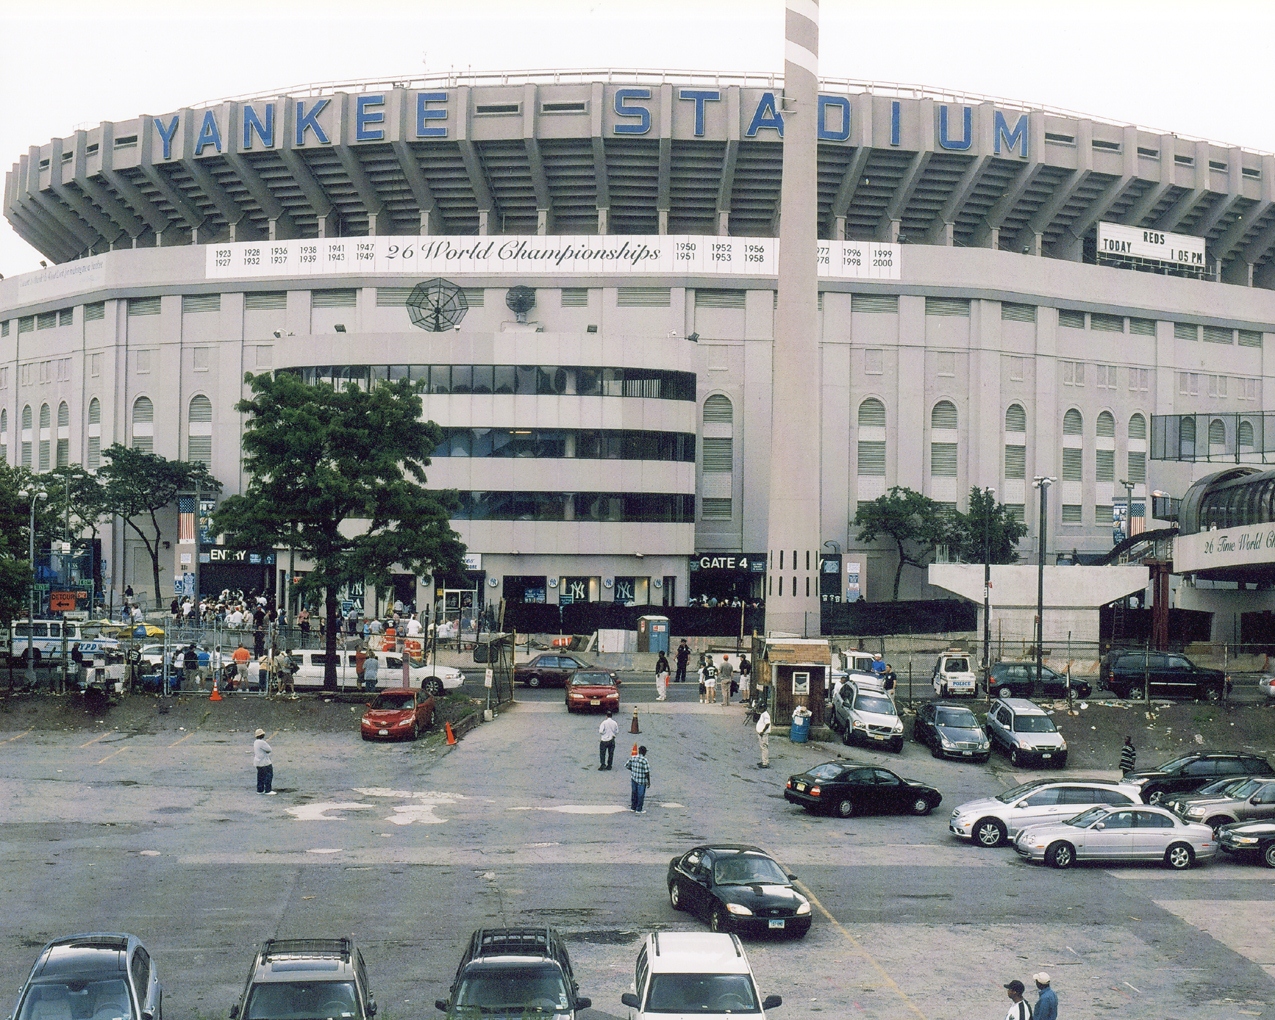 Mlb American League Background Of Old Yankee Stadium New York Yankees